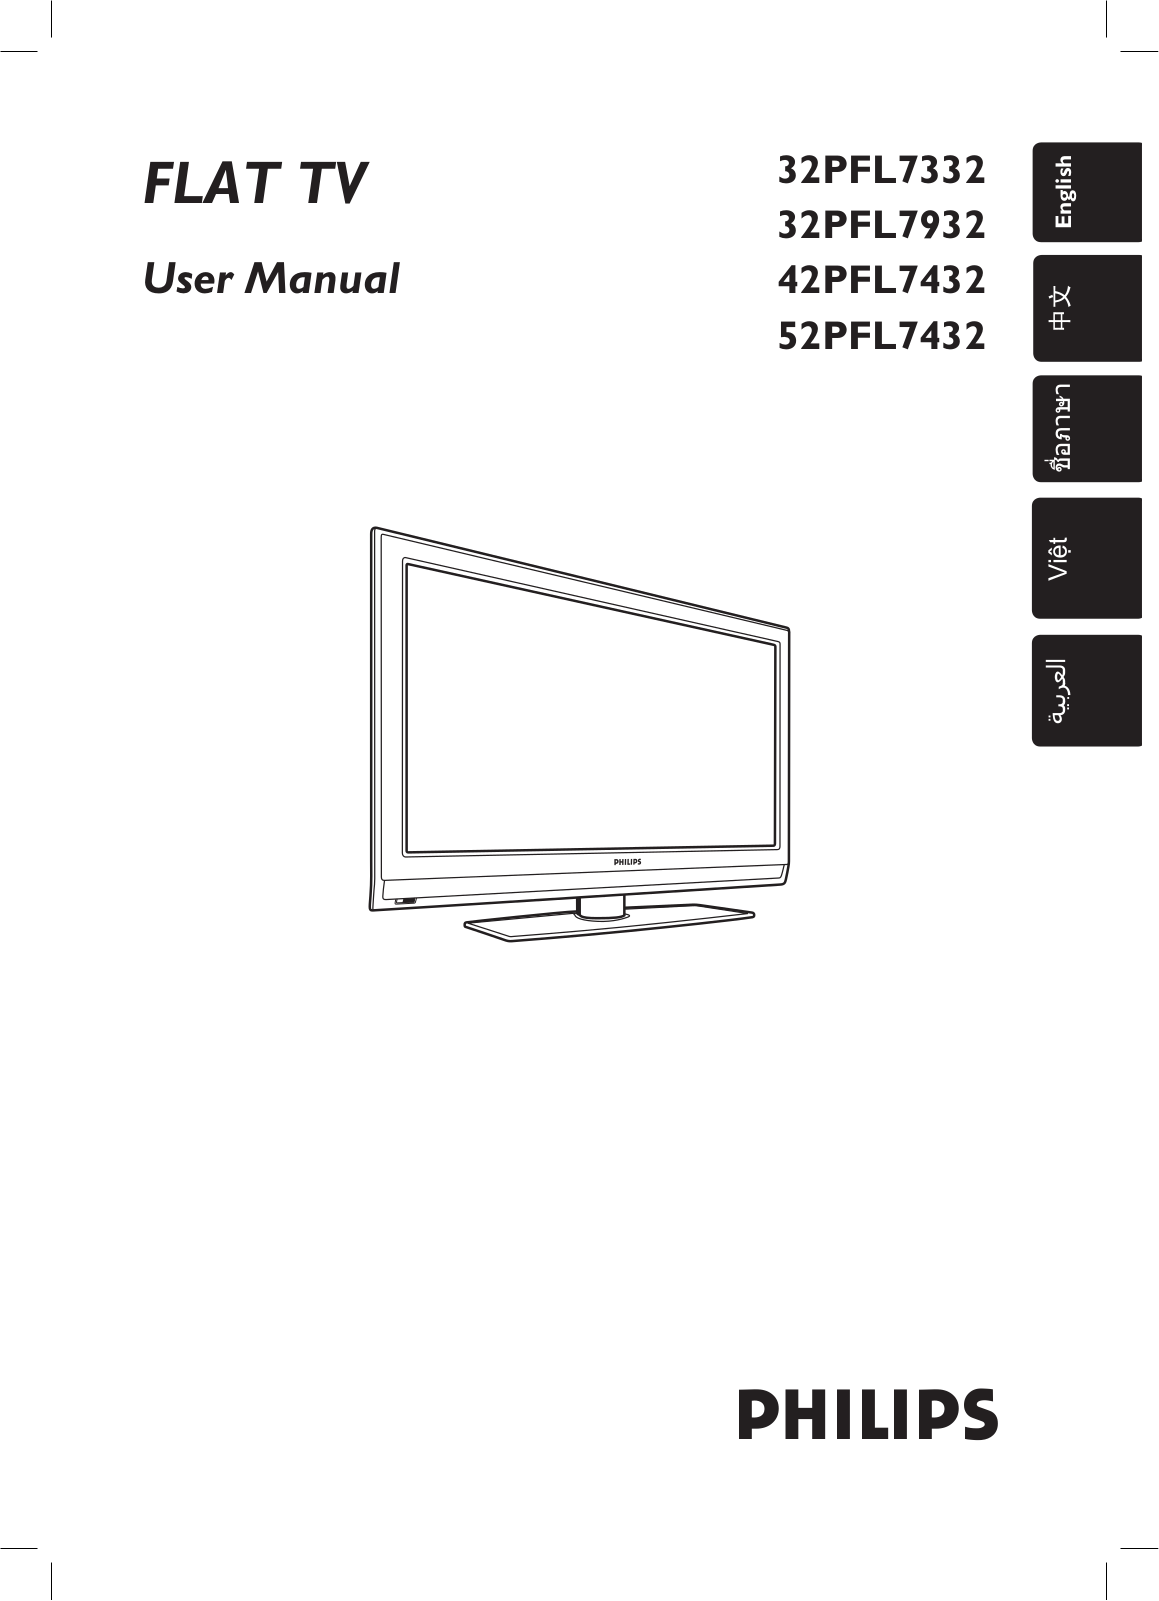 PHILIPS 42PFL7432, 32PFL7332 User Manual